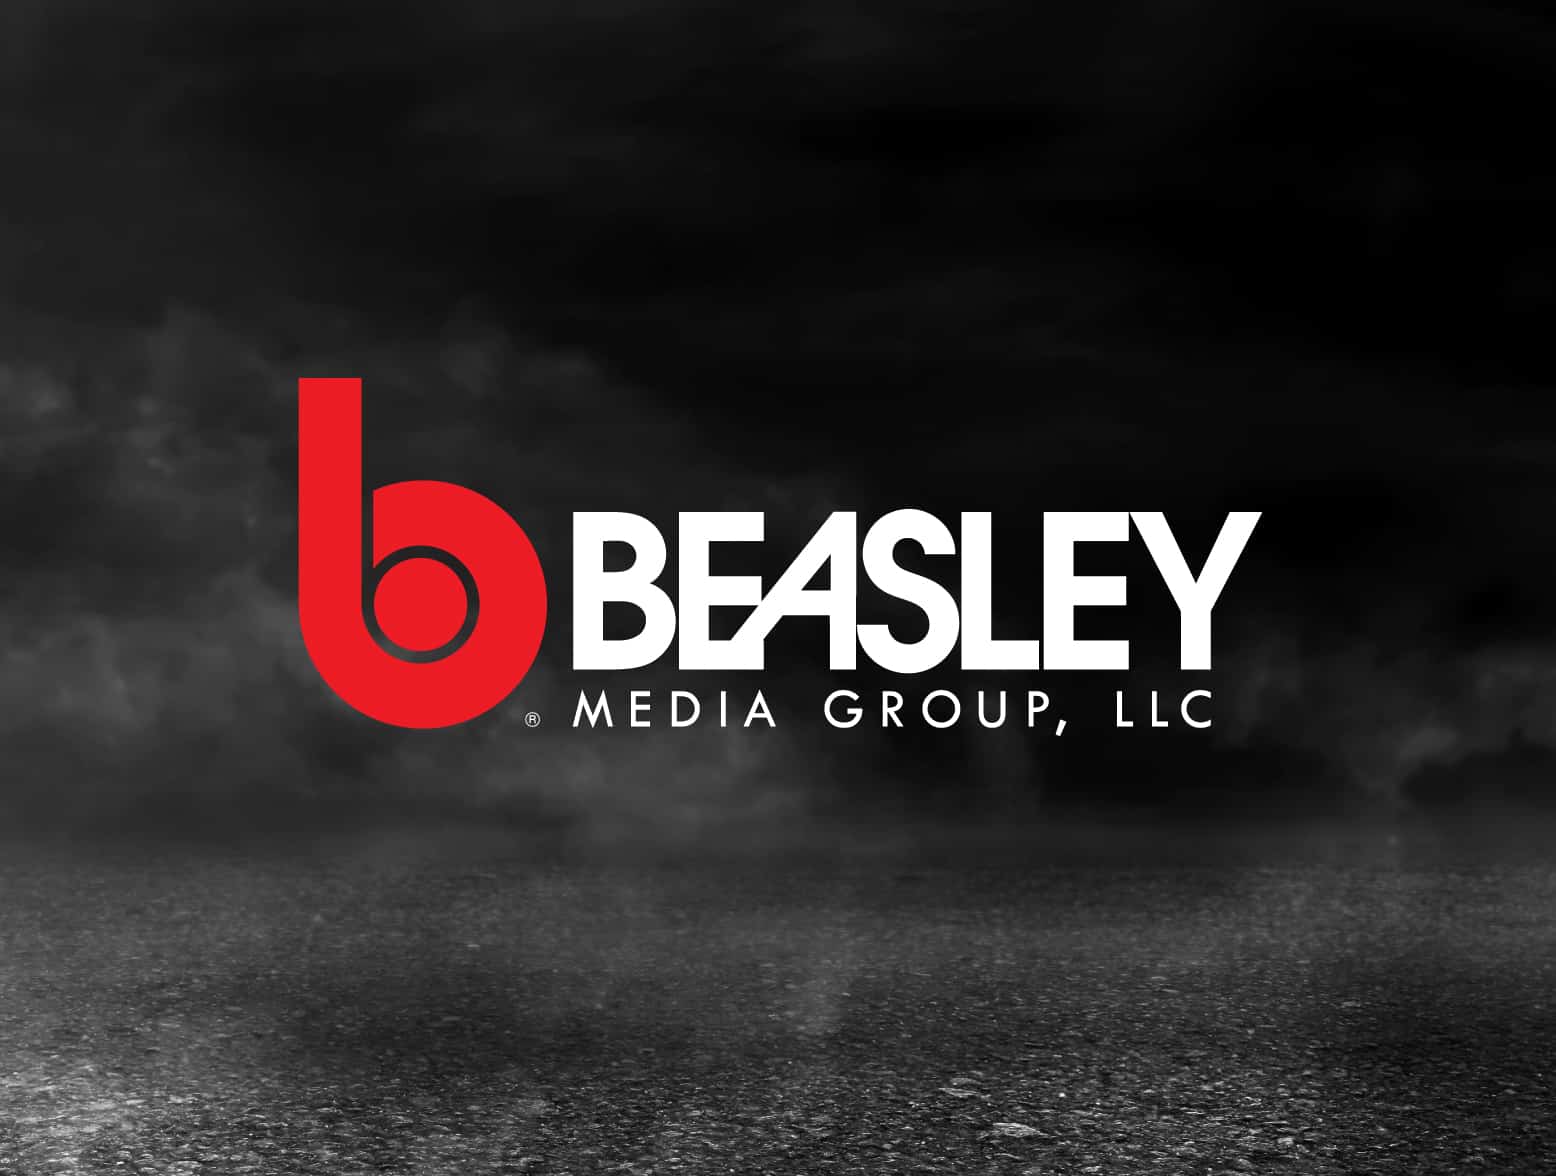 beasley logo on asphalt background